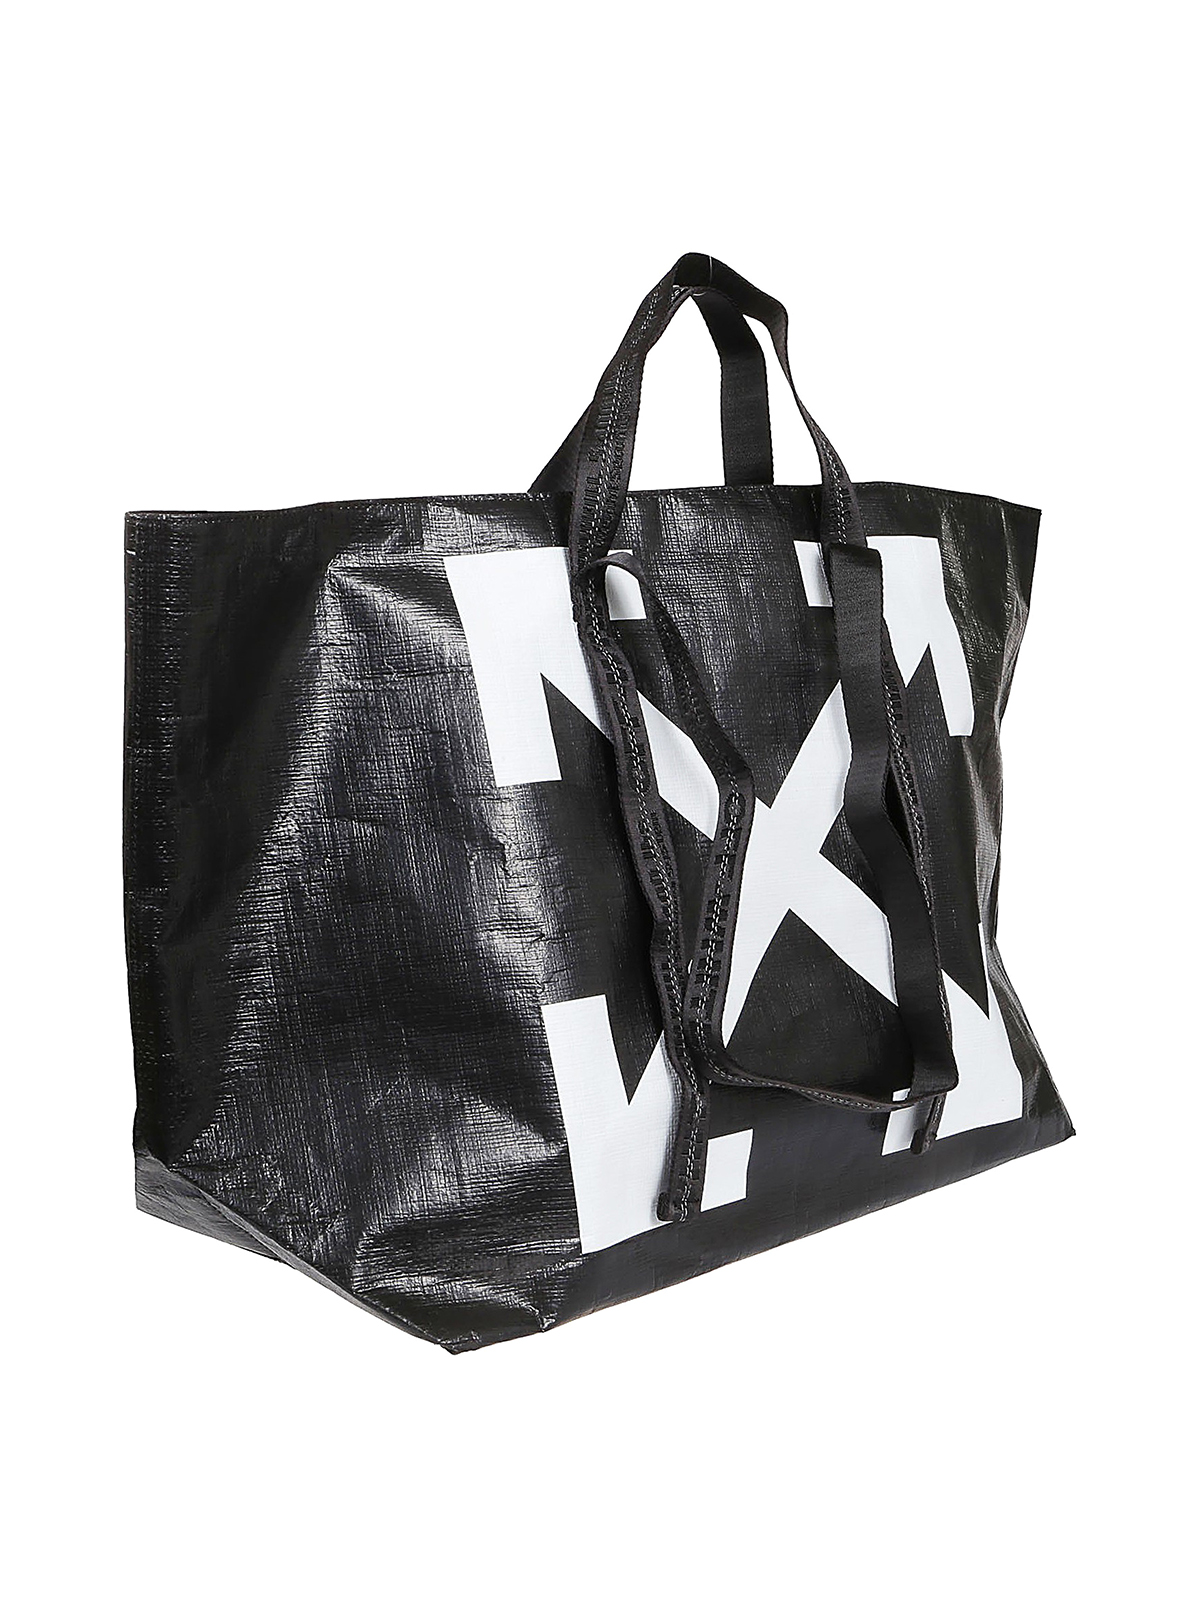 Totes bags Off-White - Arrow black tote bag - OWNA094E19F591101001